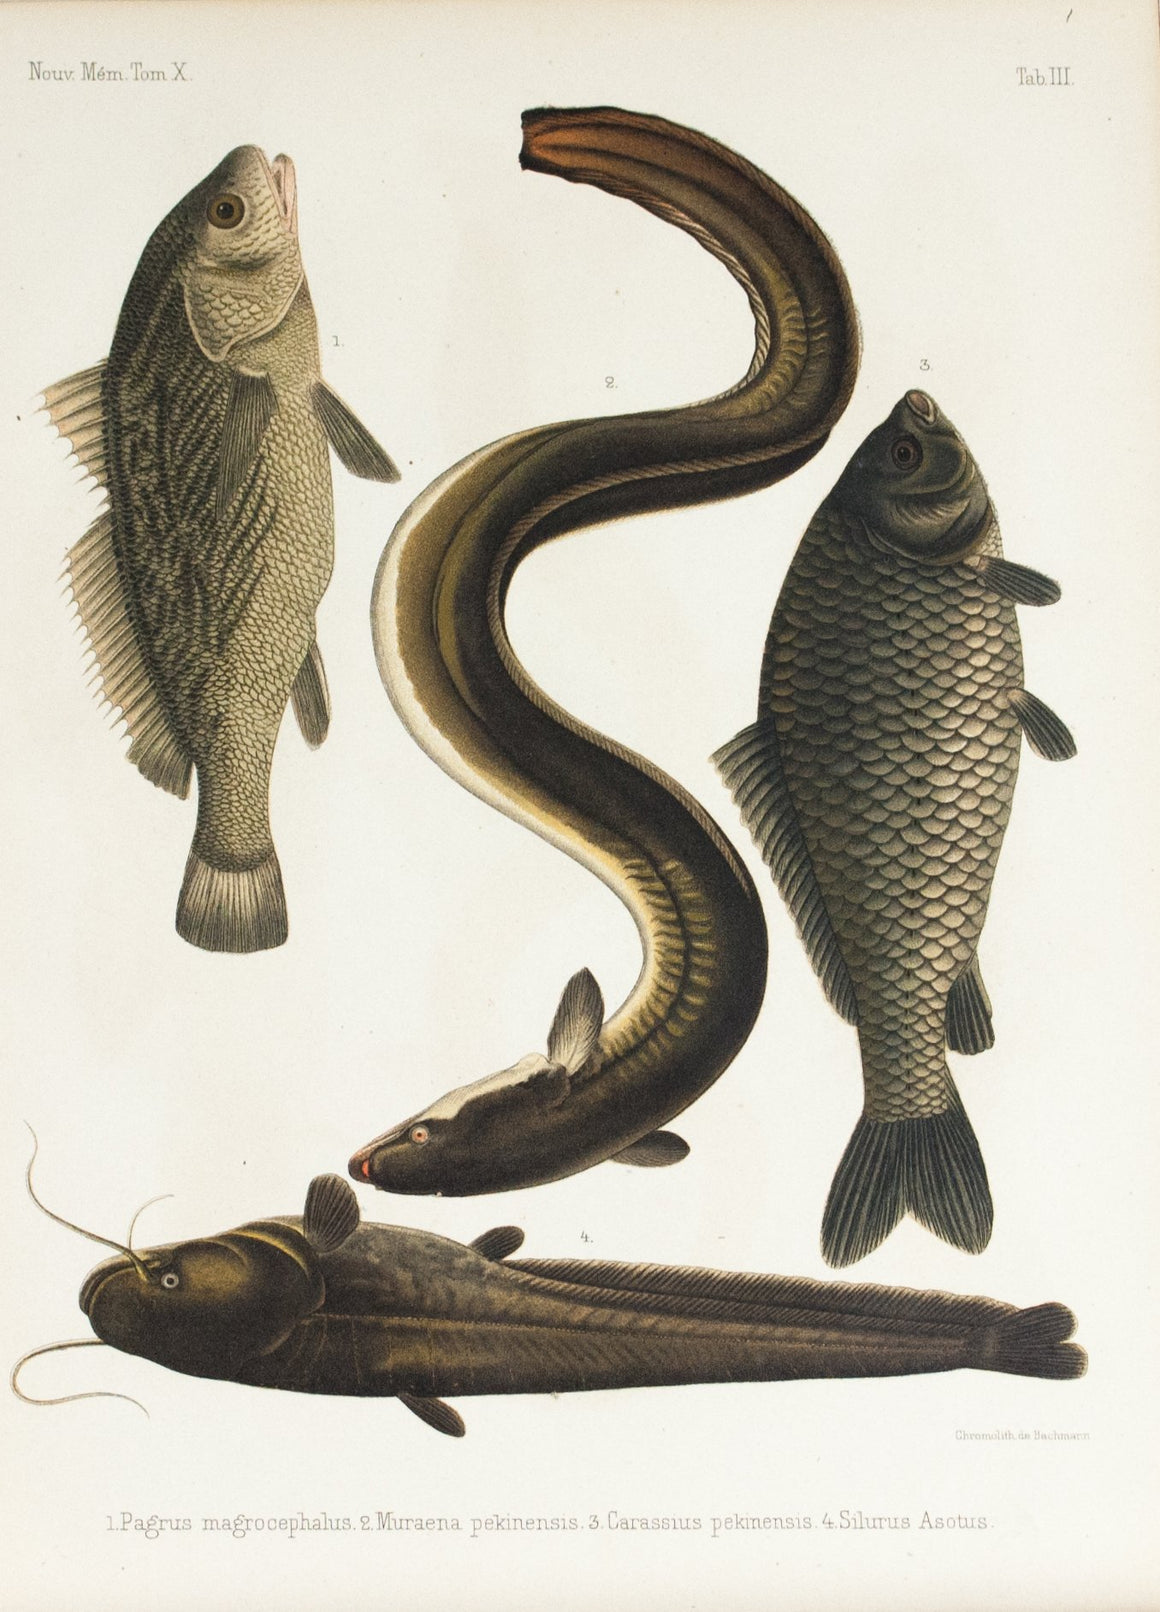 1855 Tab III - Japanese eel - Imprimerie de L'Universite Imeriale